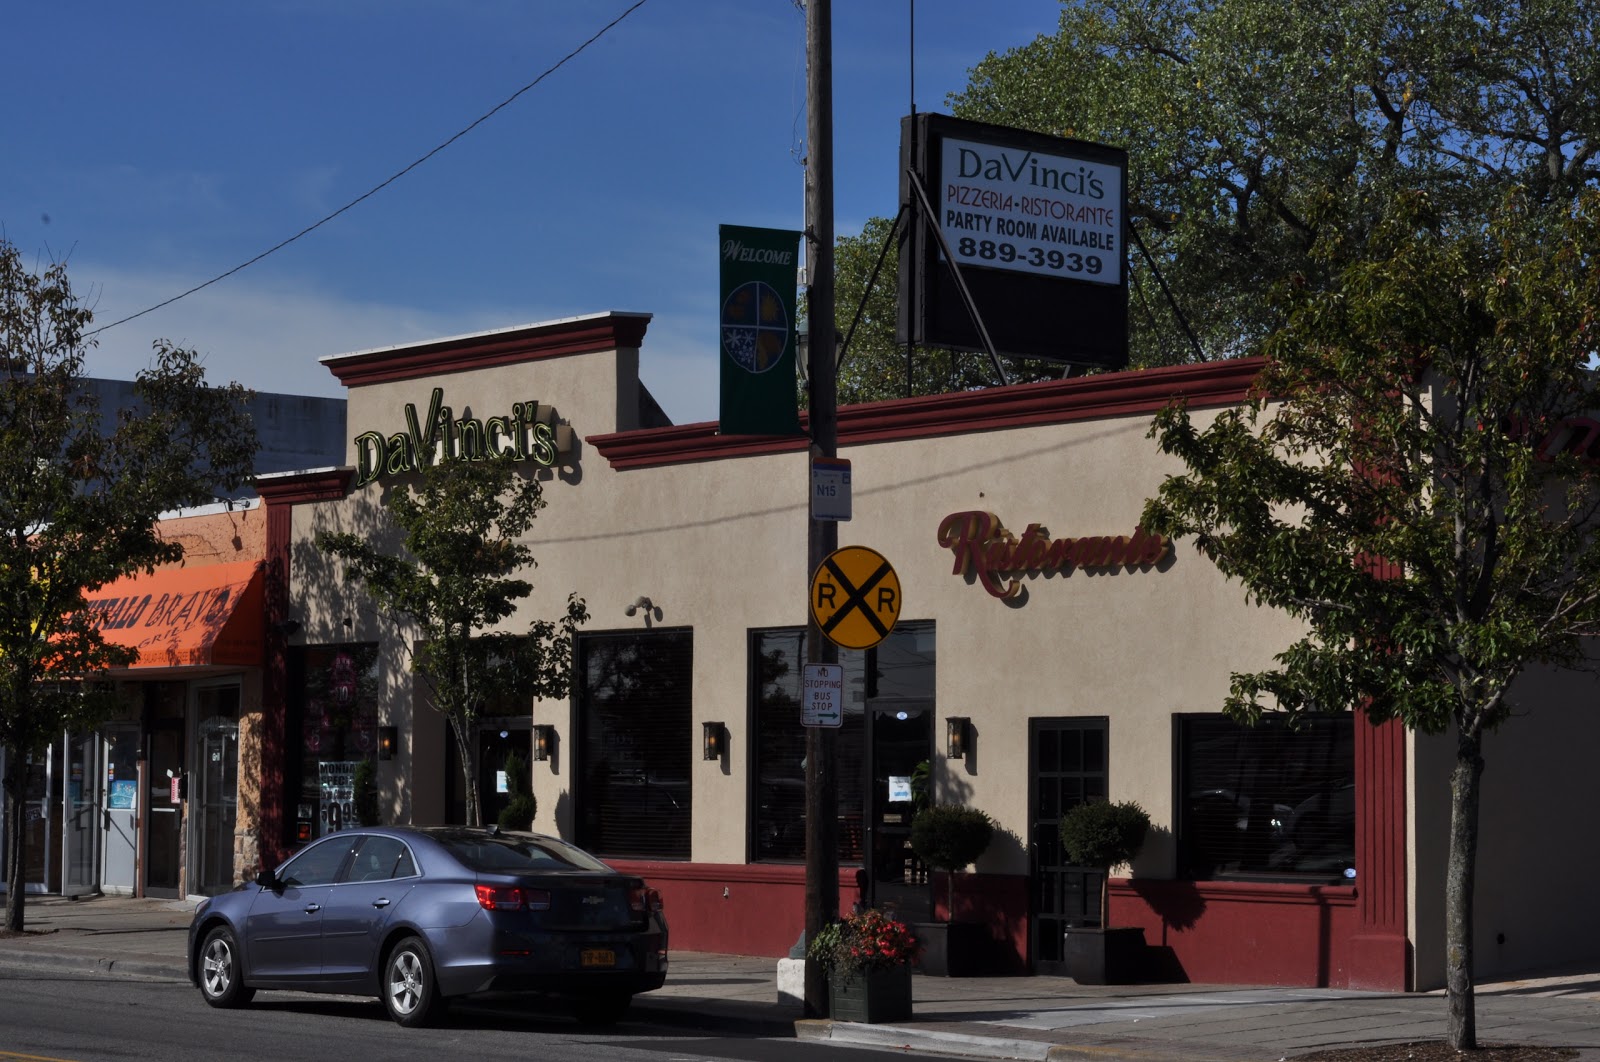 Photo of Davinci's Restorante in Island Park City, New York, United States - 2 Picture of Restaurant, Food, Point of interest, Establishment